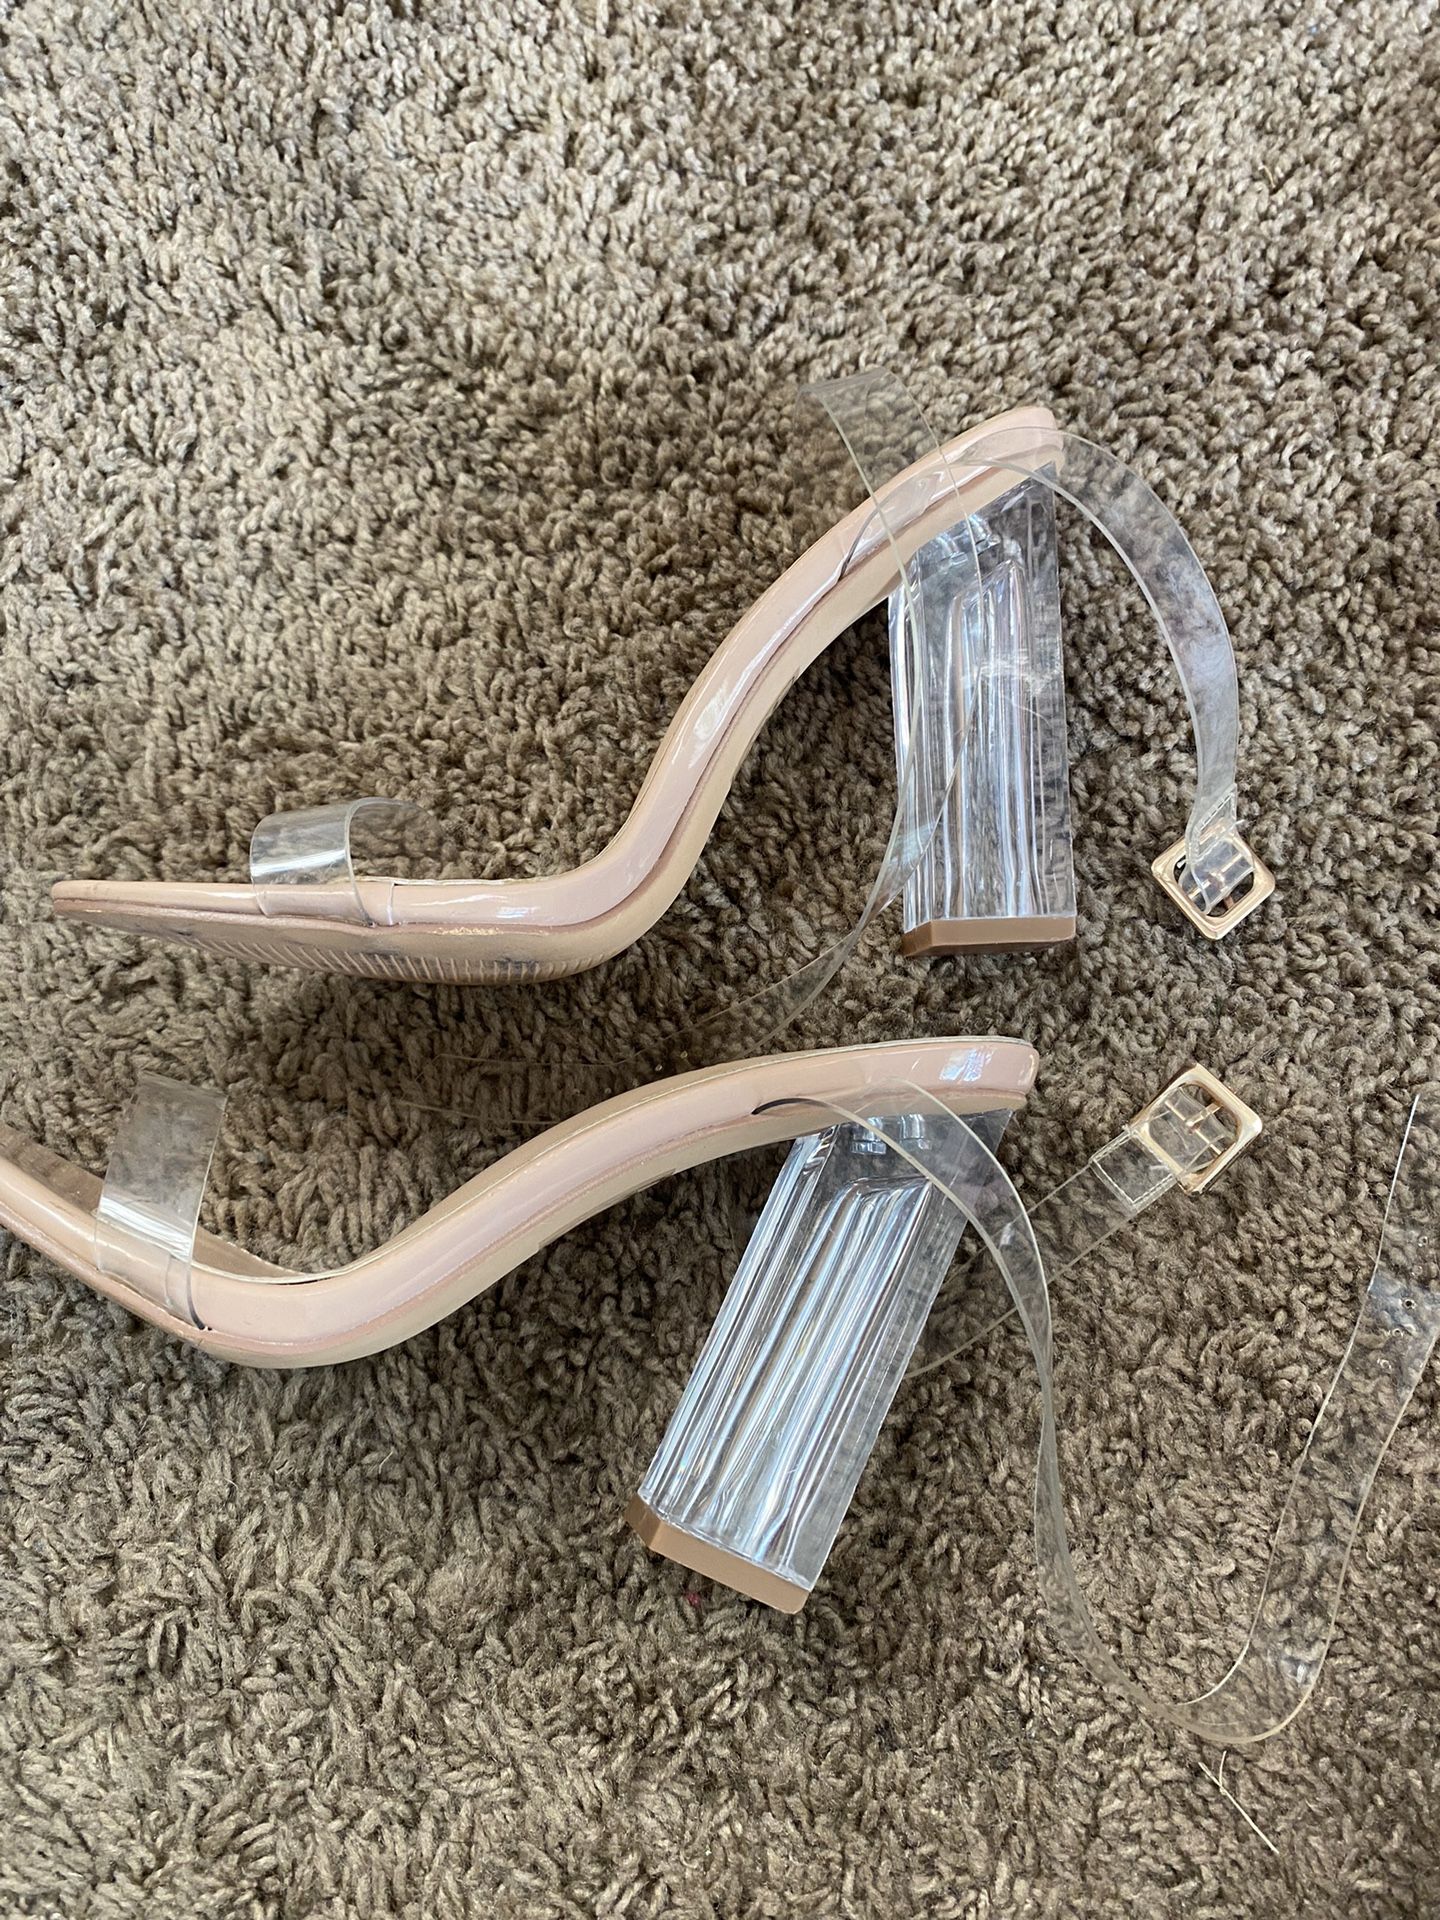 fashion nova clear high heels size 7.5